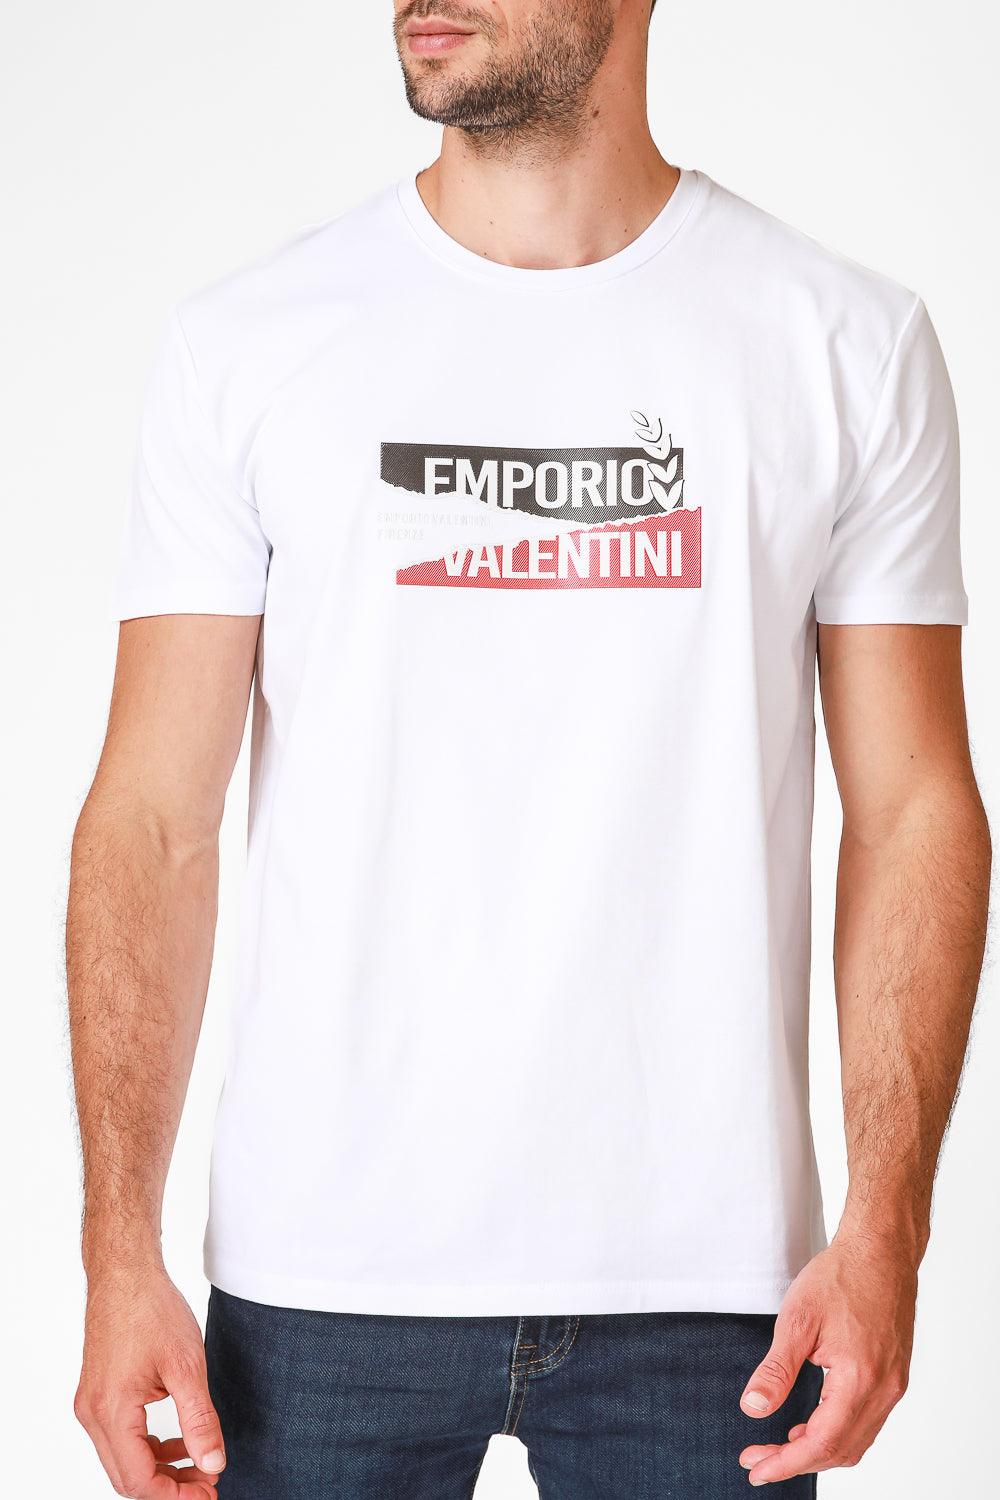 EMPORIO VALENTINI - טישירט לוגו לבנה עם כיתוב לוגו - MASHBIR//365